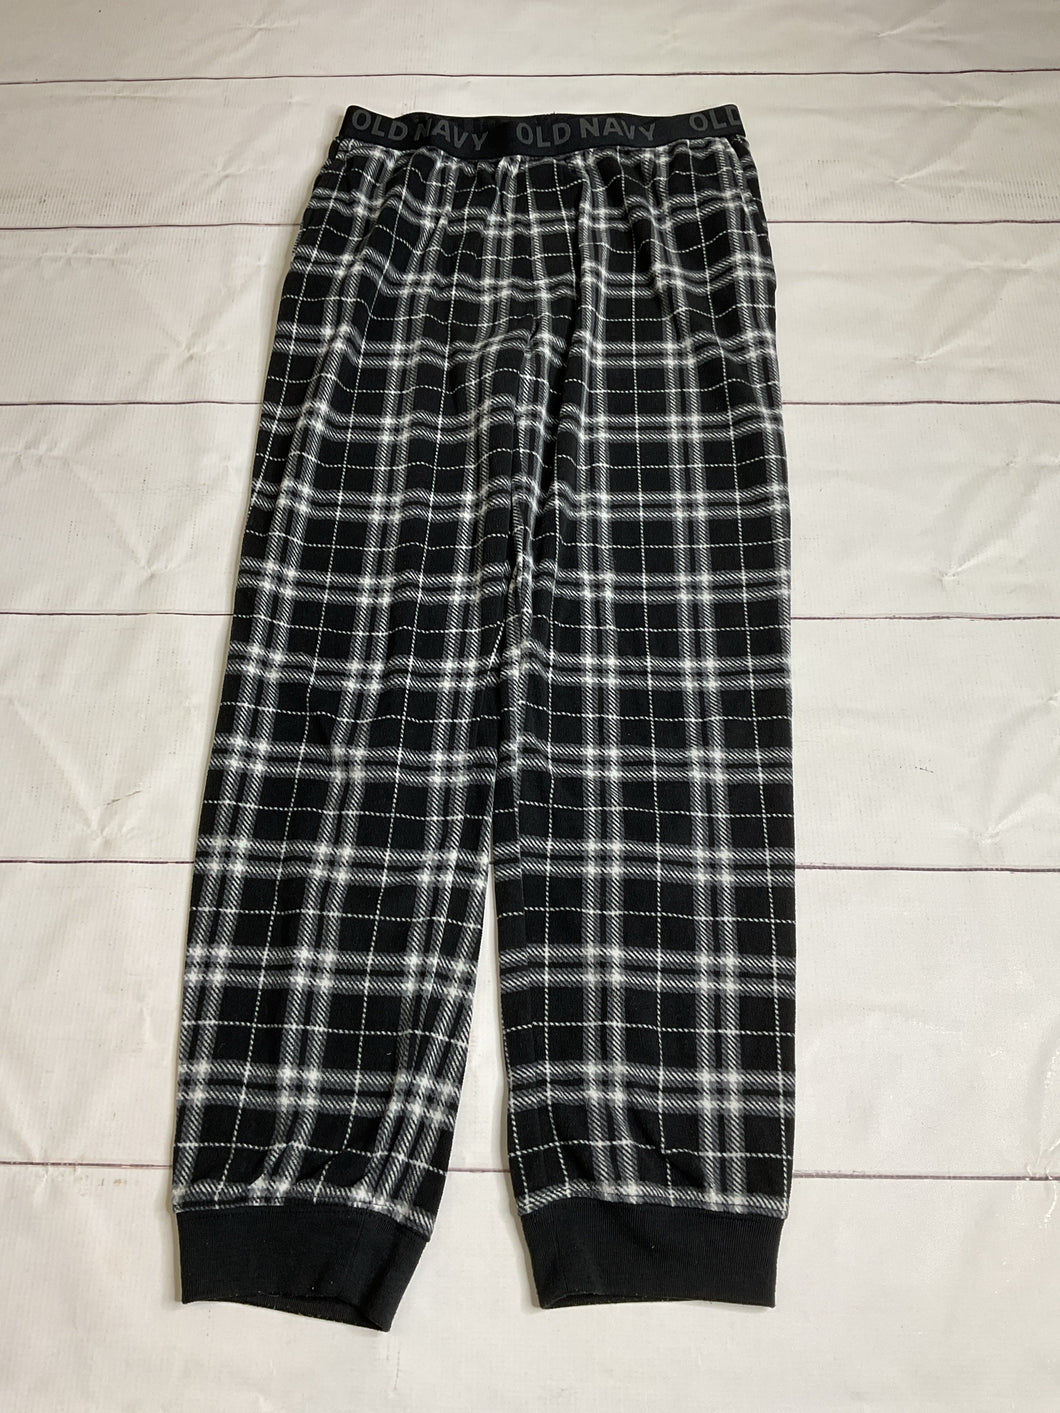 Old Navy Size 14/16 Pajama Pants